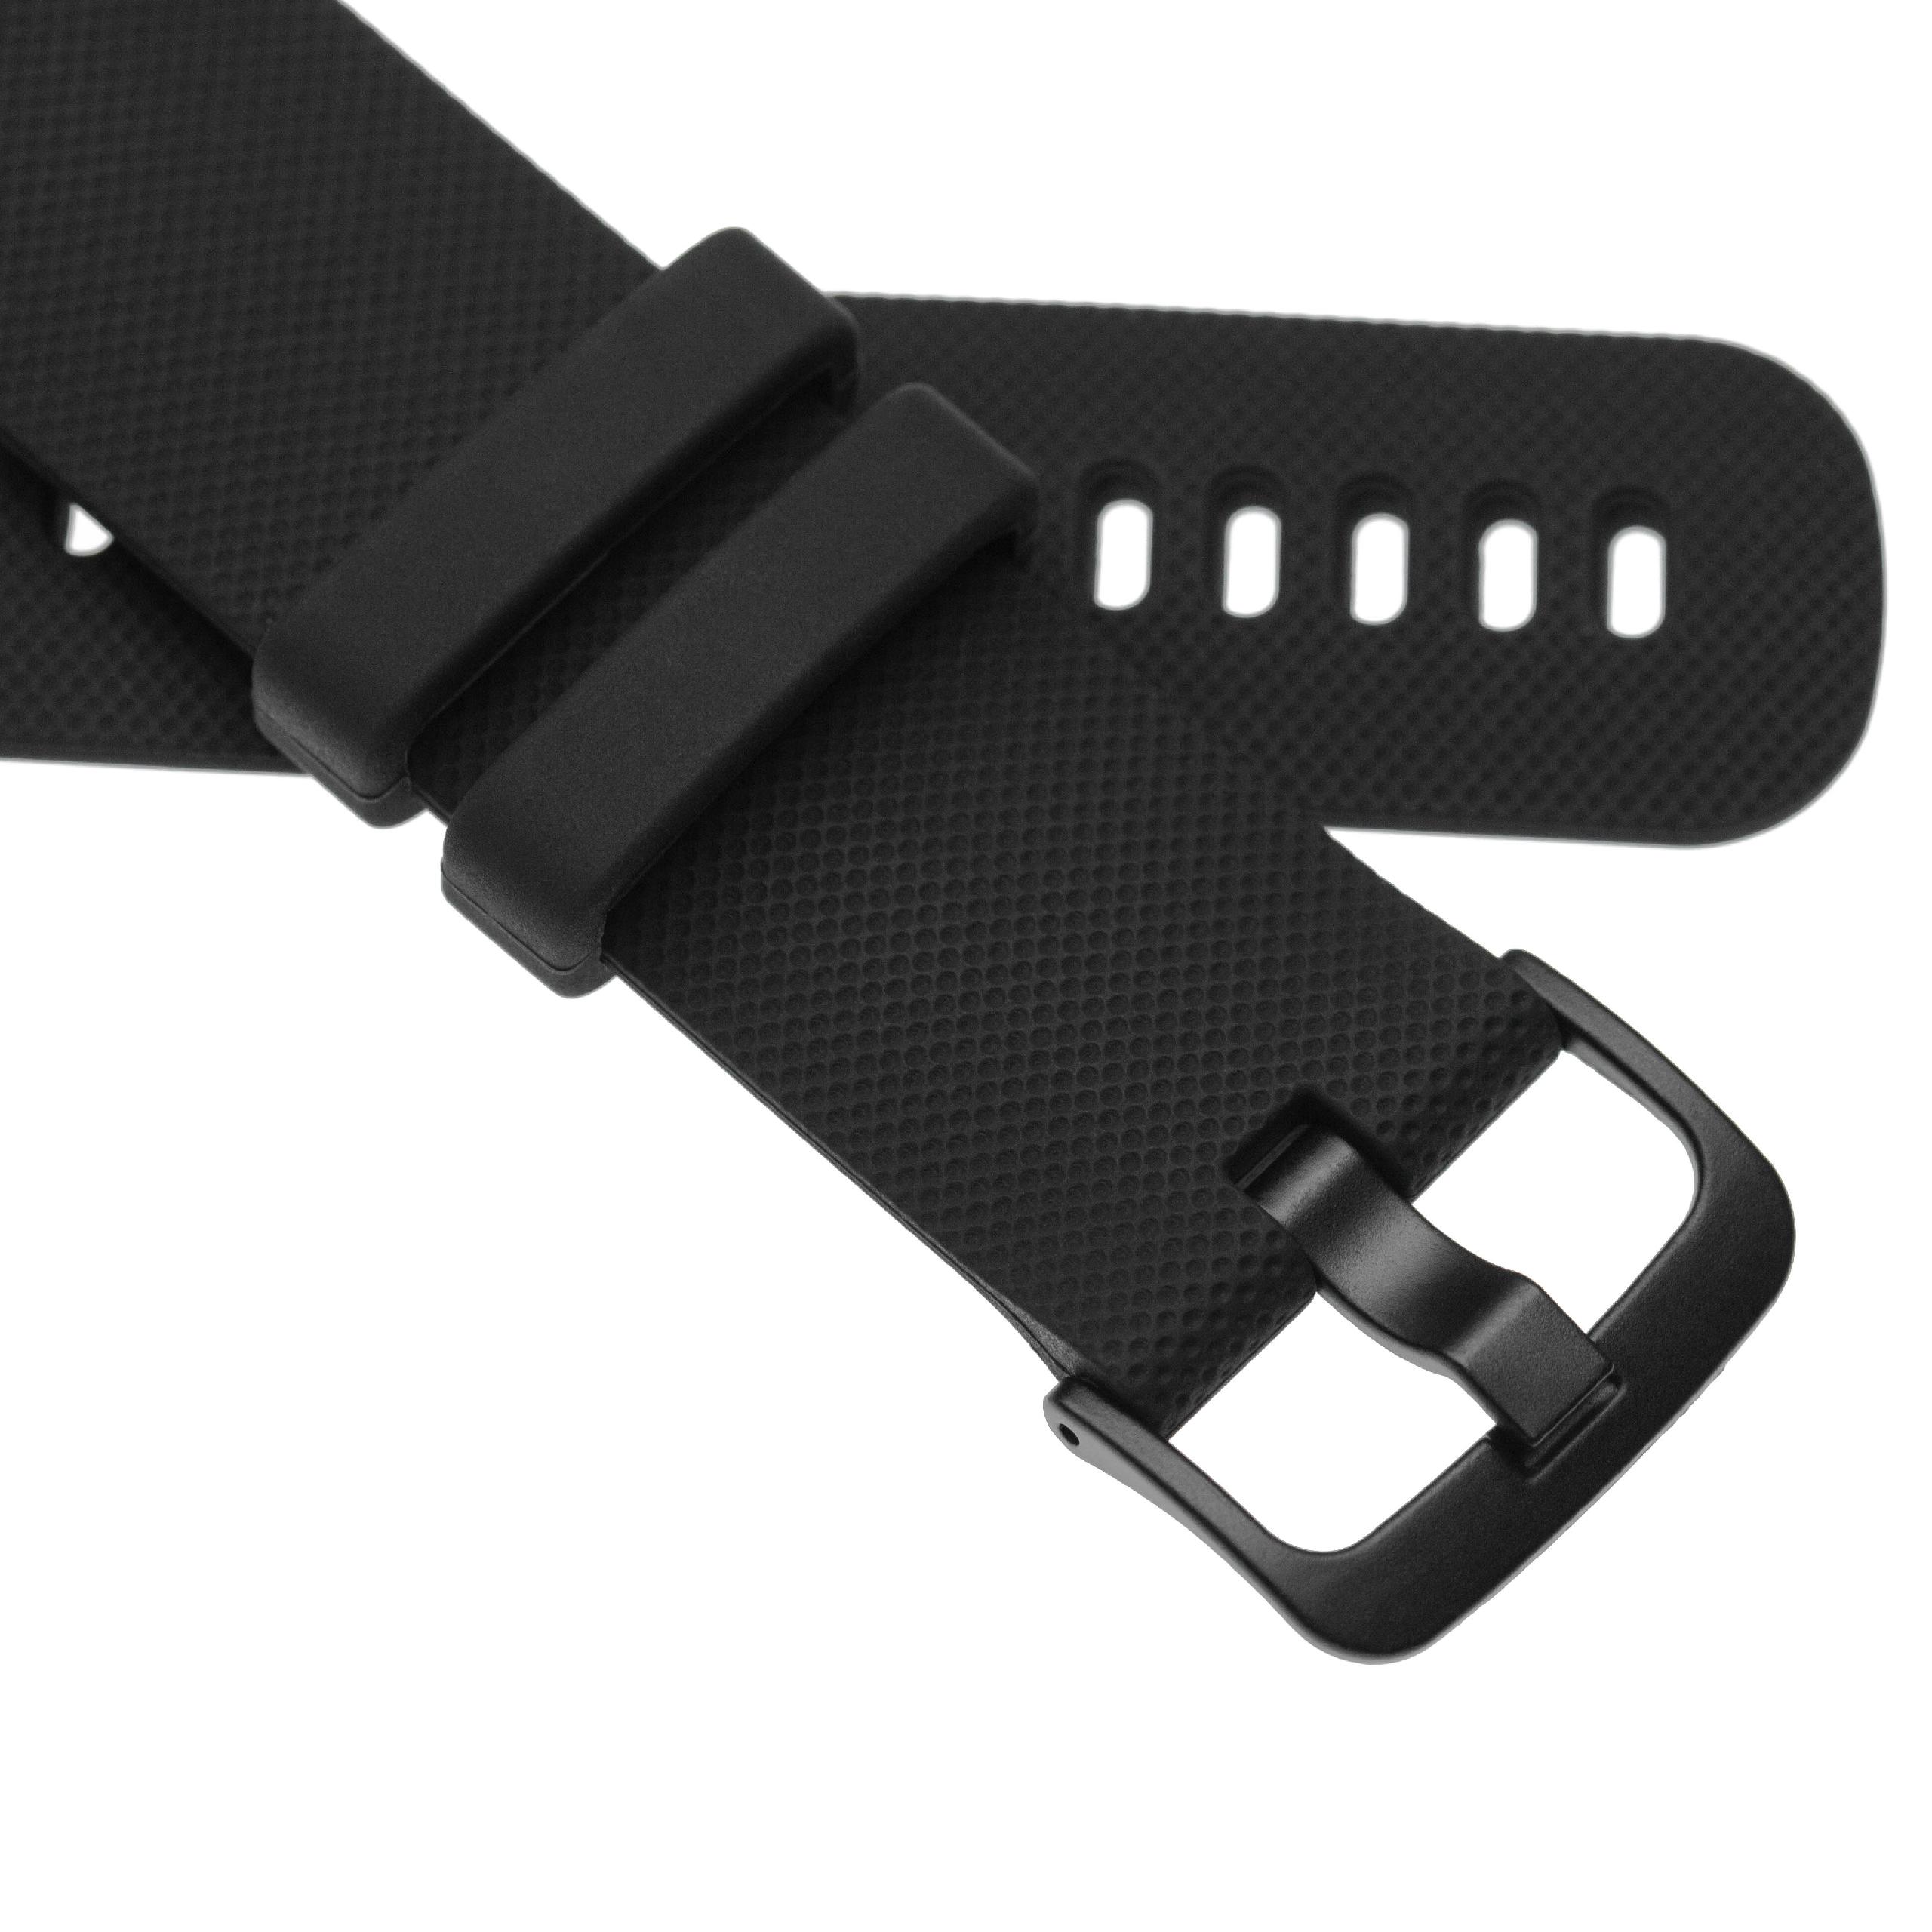 Pasek do smartwatch Garmin Vivoactive - dł. 12,1 + 9,2 cm, szer. 22 mm, silikon, czarny